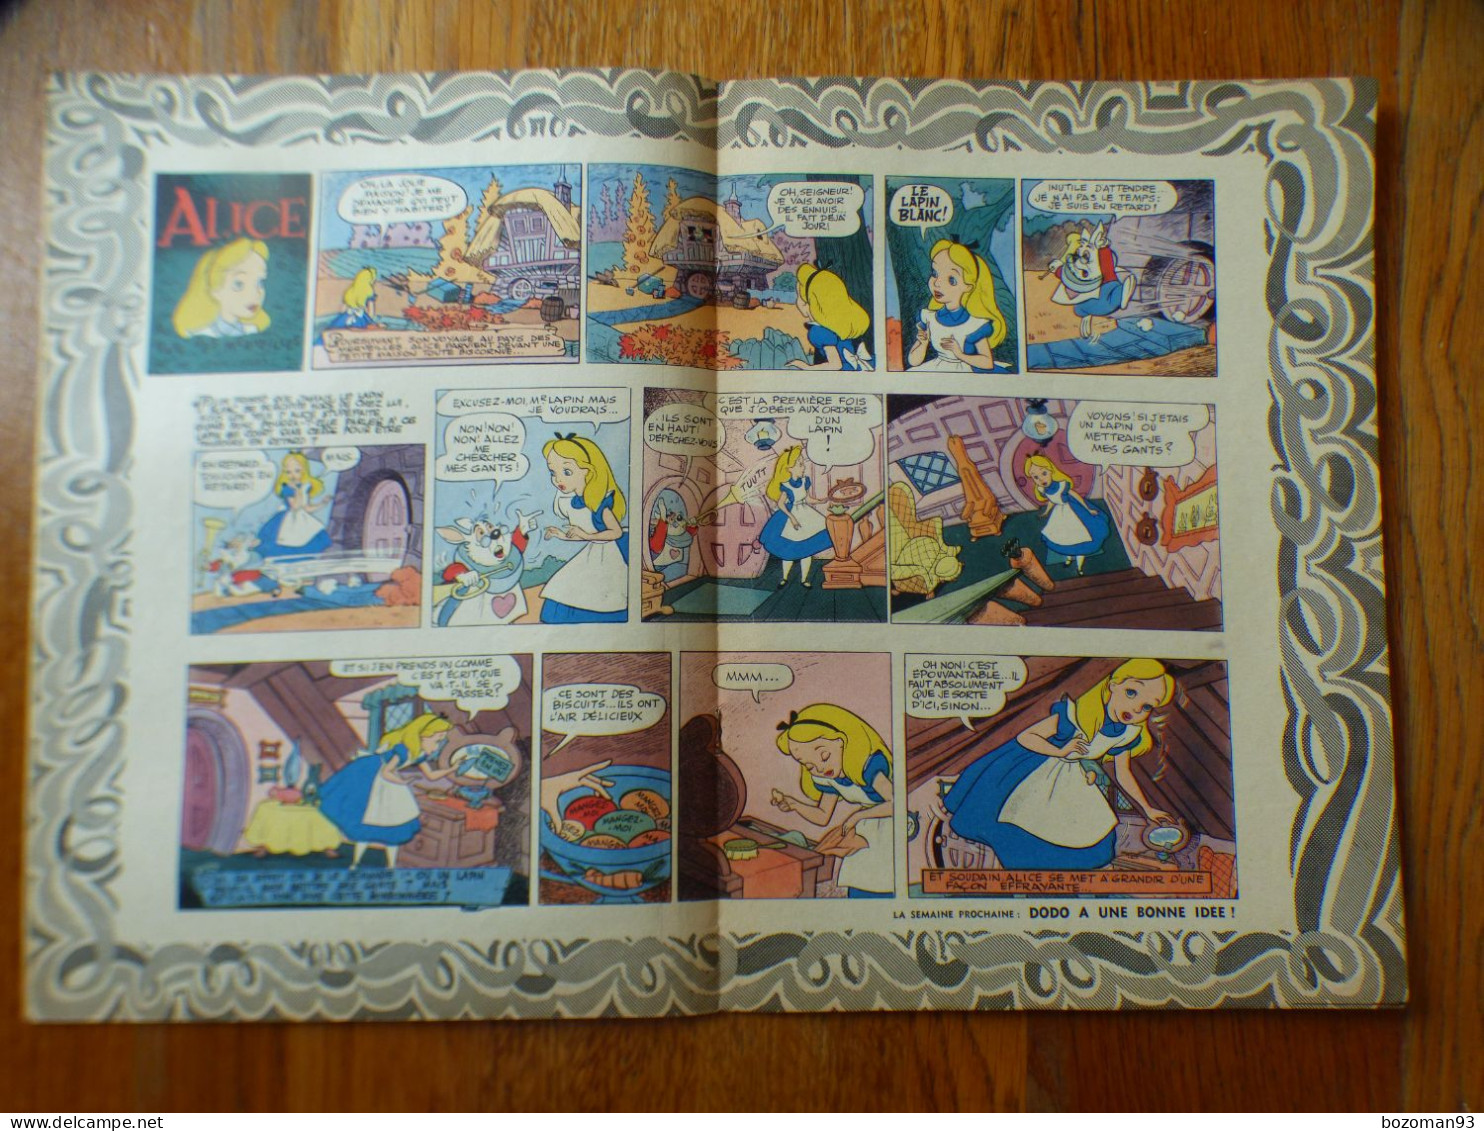 JOURNAL MICKEY BELGE N° 74  Du 07/03/1952 Avec  ALICE AU PAYS DES MERVEILLES + COVER MICKEY - Journal De Mickey